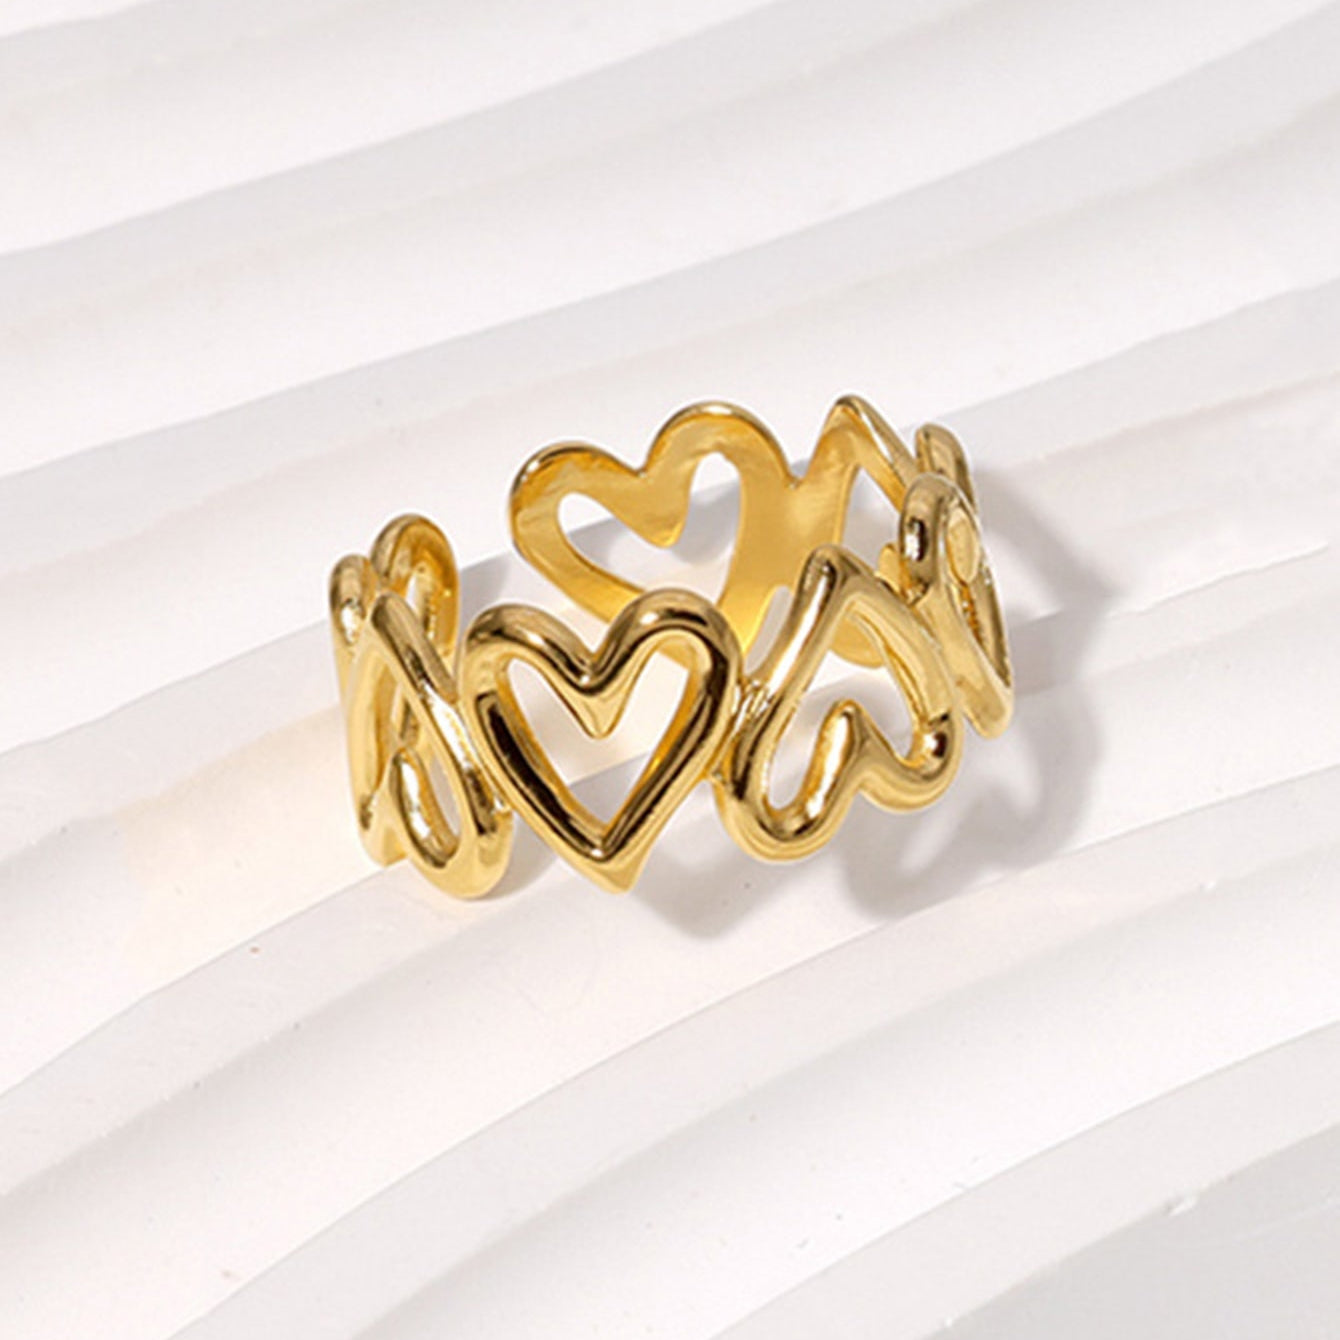 bays anillo acero inoxidable corazon accesorios mujer fashion ring jewelry 